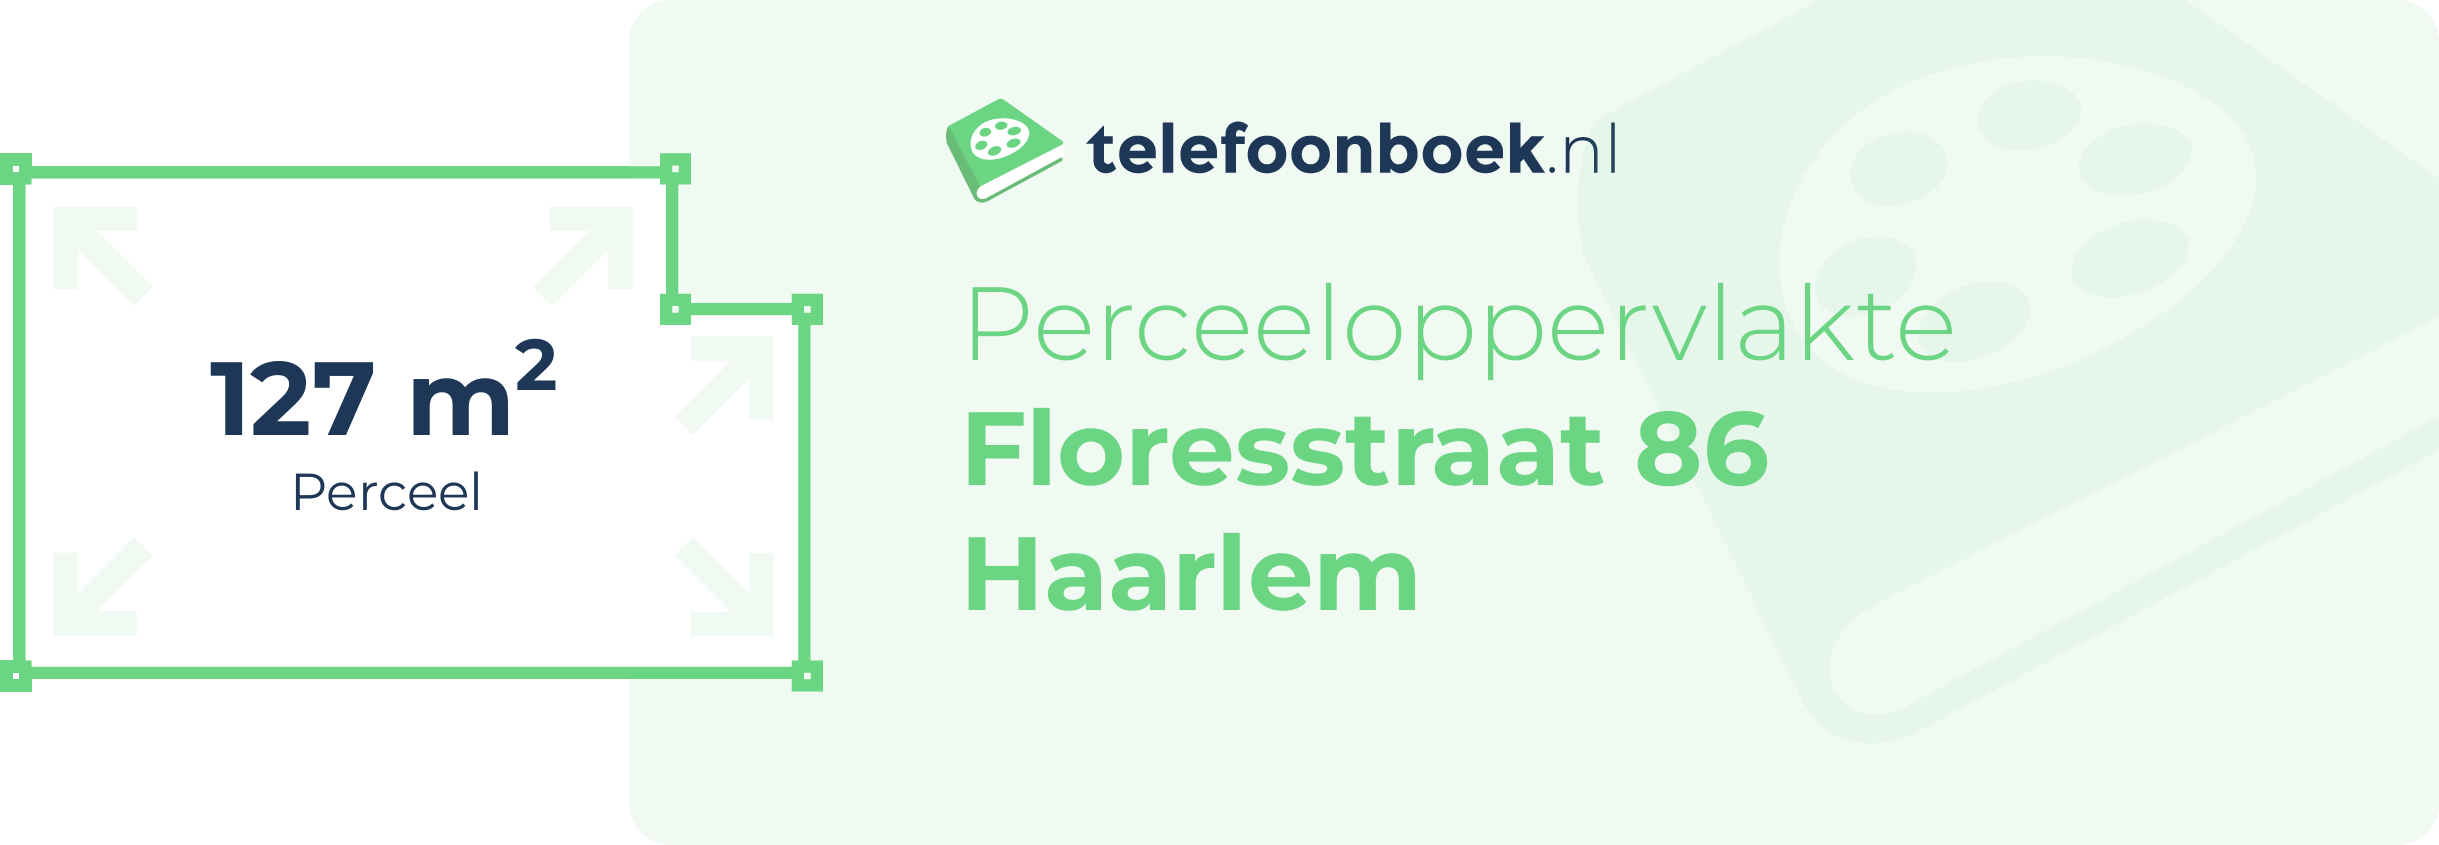 Perceeloppervlakte Floresstraat 86 Haarlem